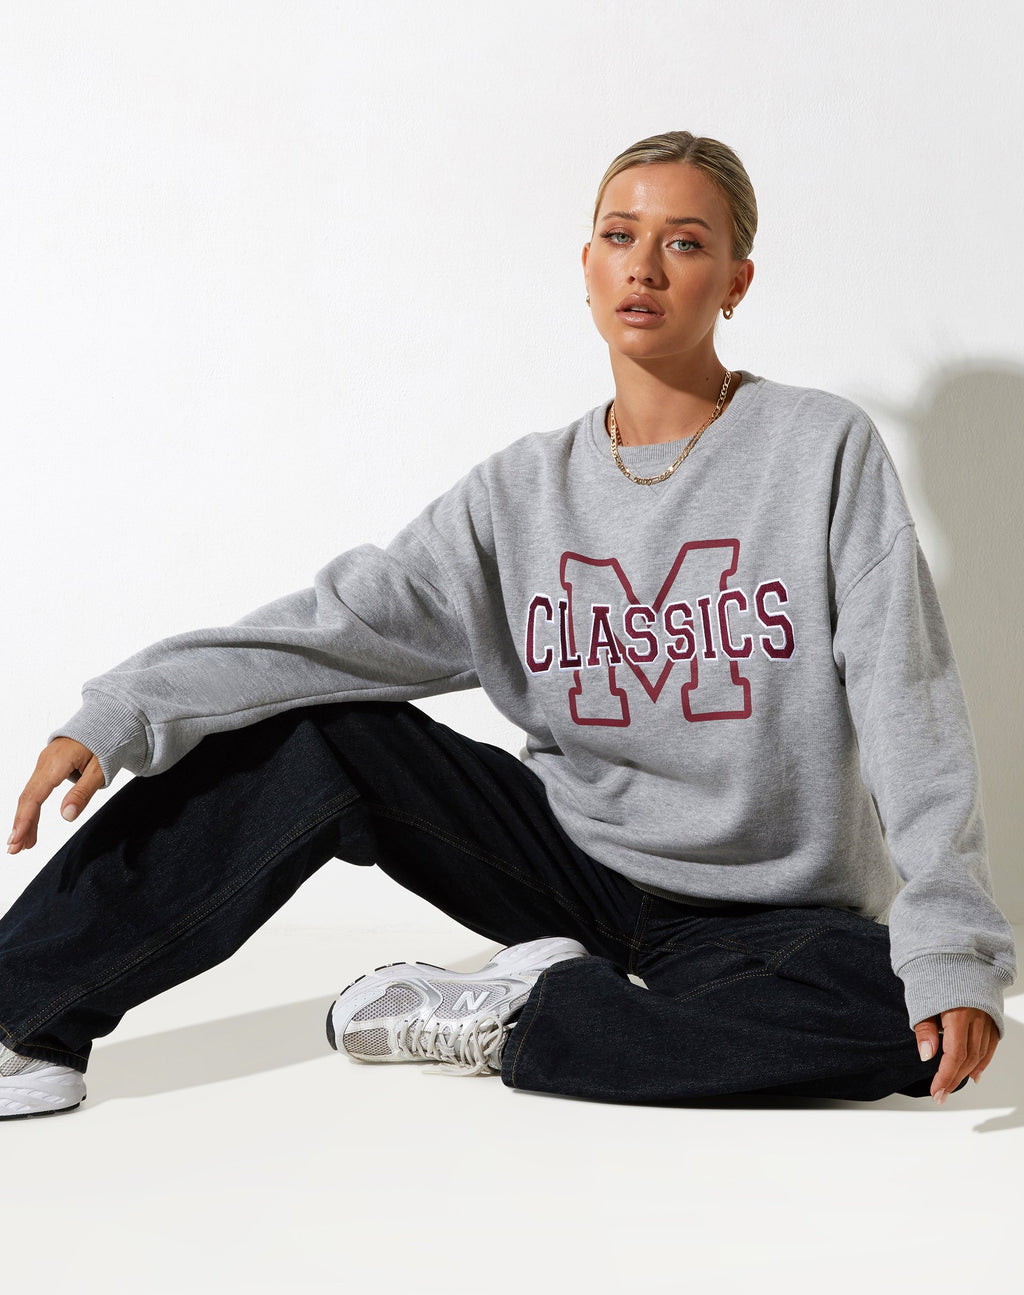 Glan Sweatshirt in Grey Marl with "M Classics" Embro